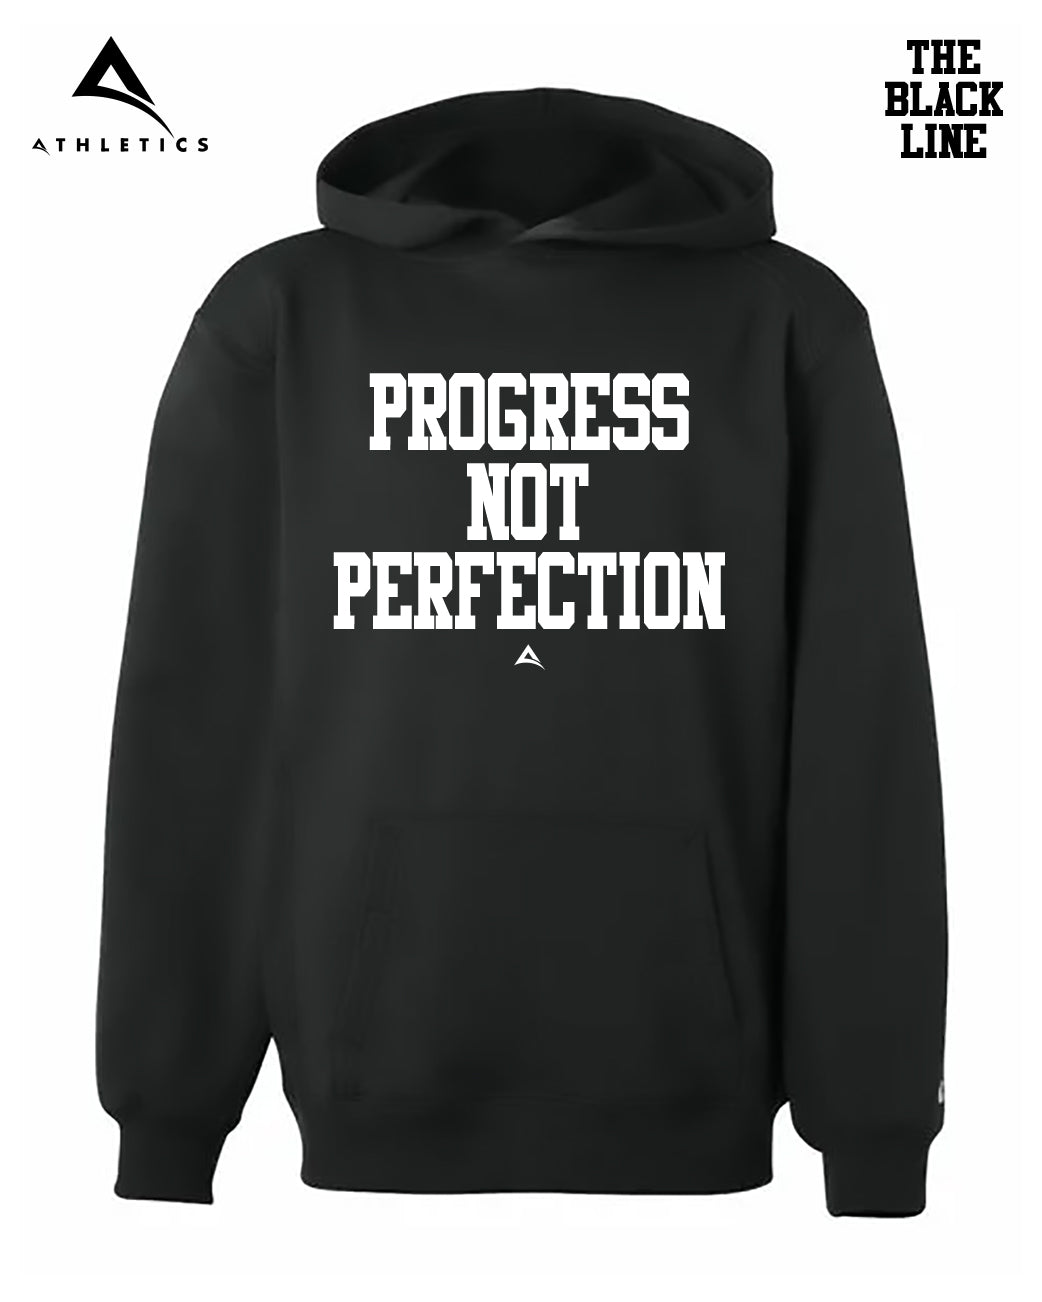 PROGRESS NOT PERFECTION